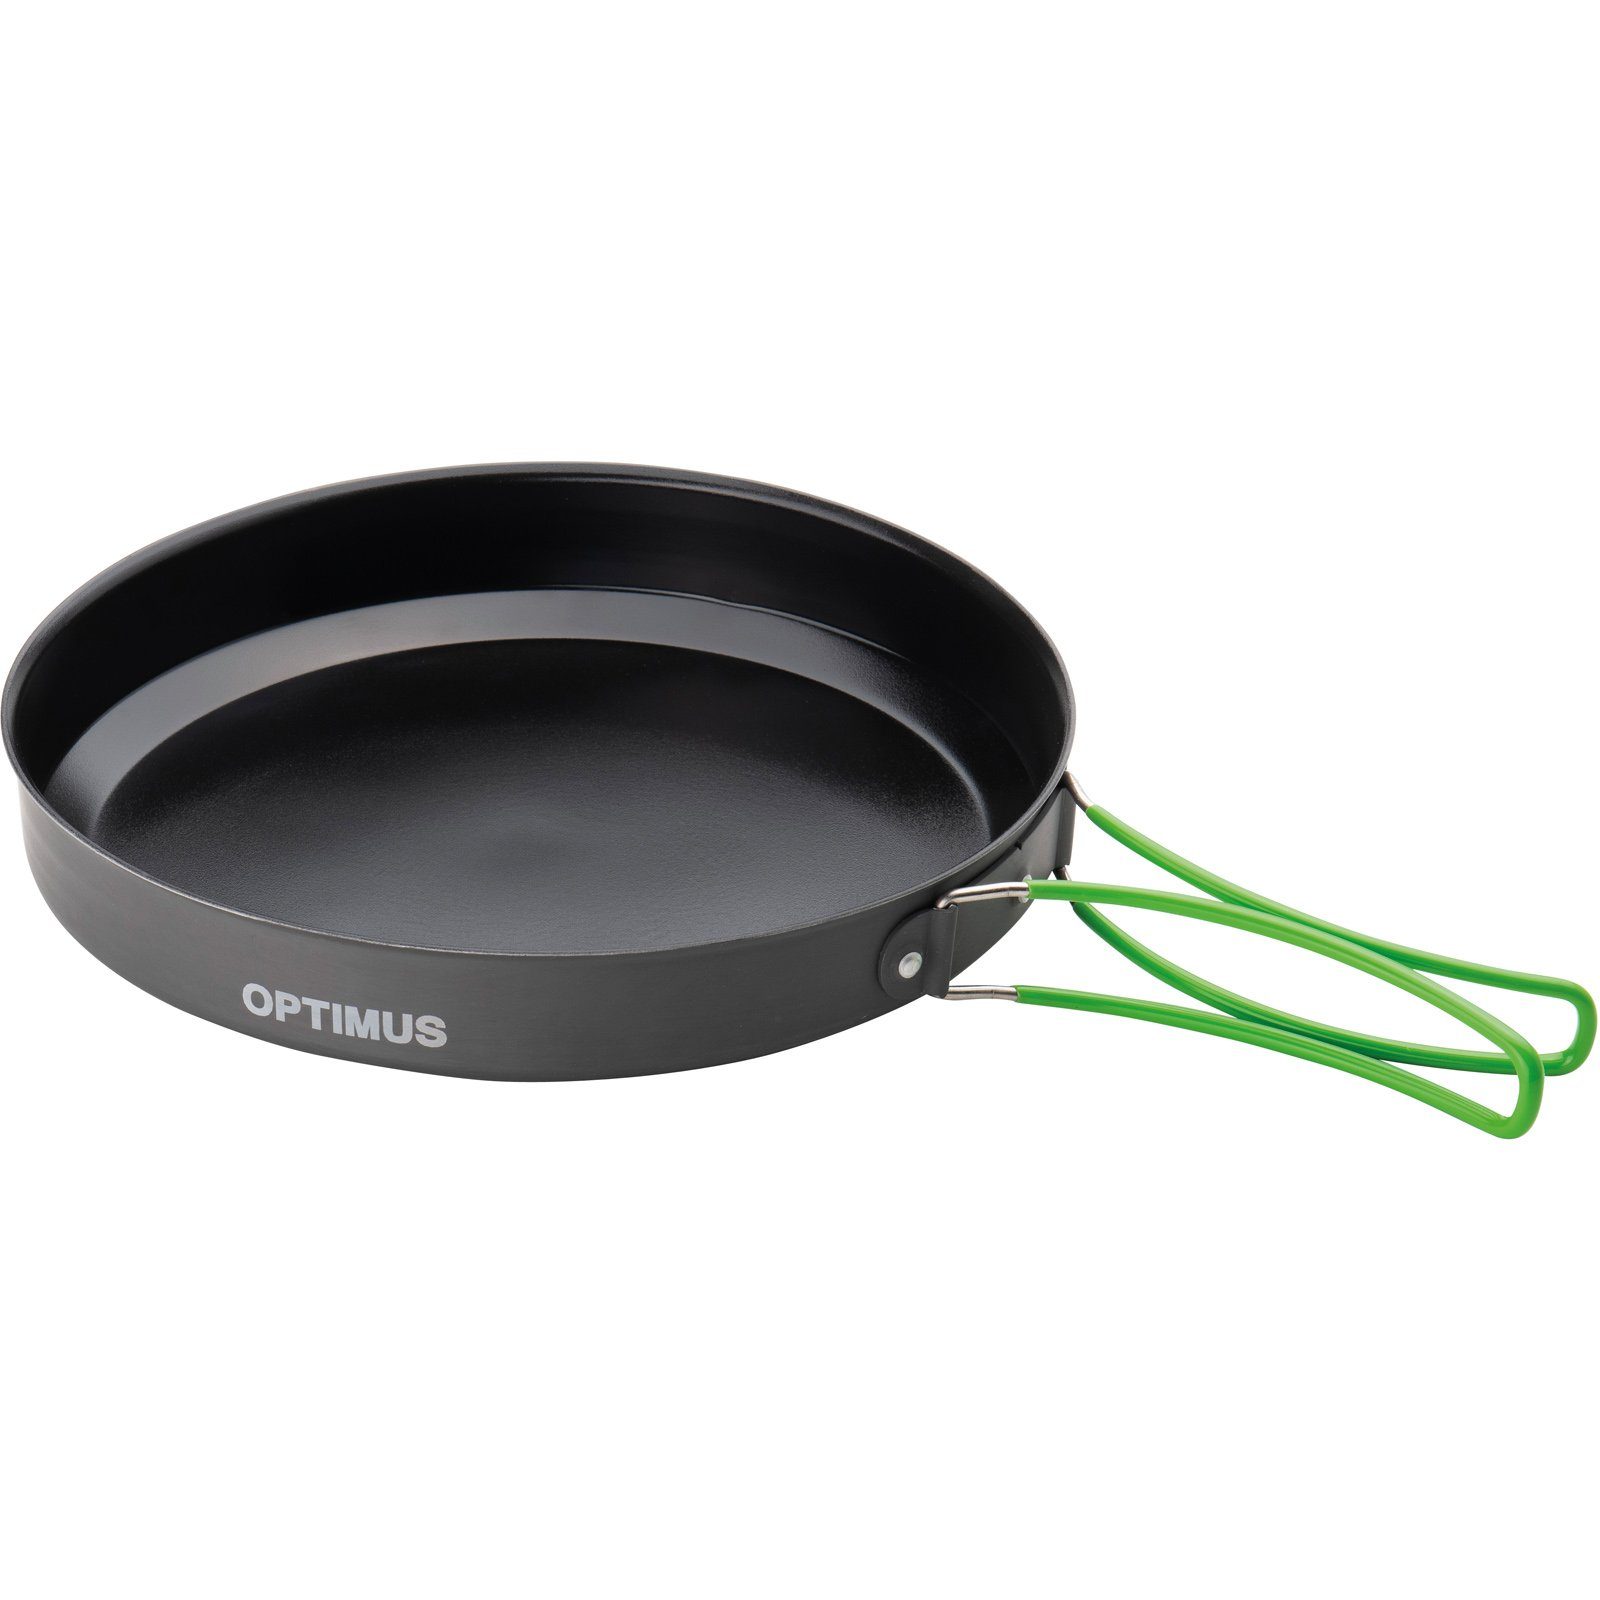 Terra schwarz Alu grün kg 1,16 Camping Topf-Set Küche Kochset Pfanne / OPTIMUS Camp 4 Topf Geschirr,